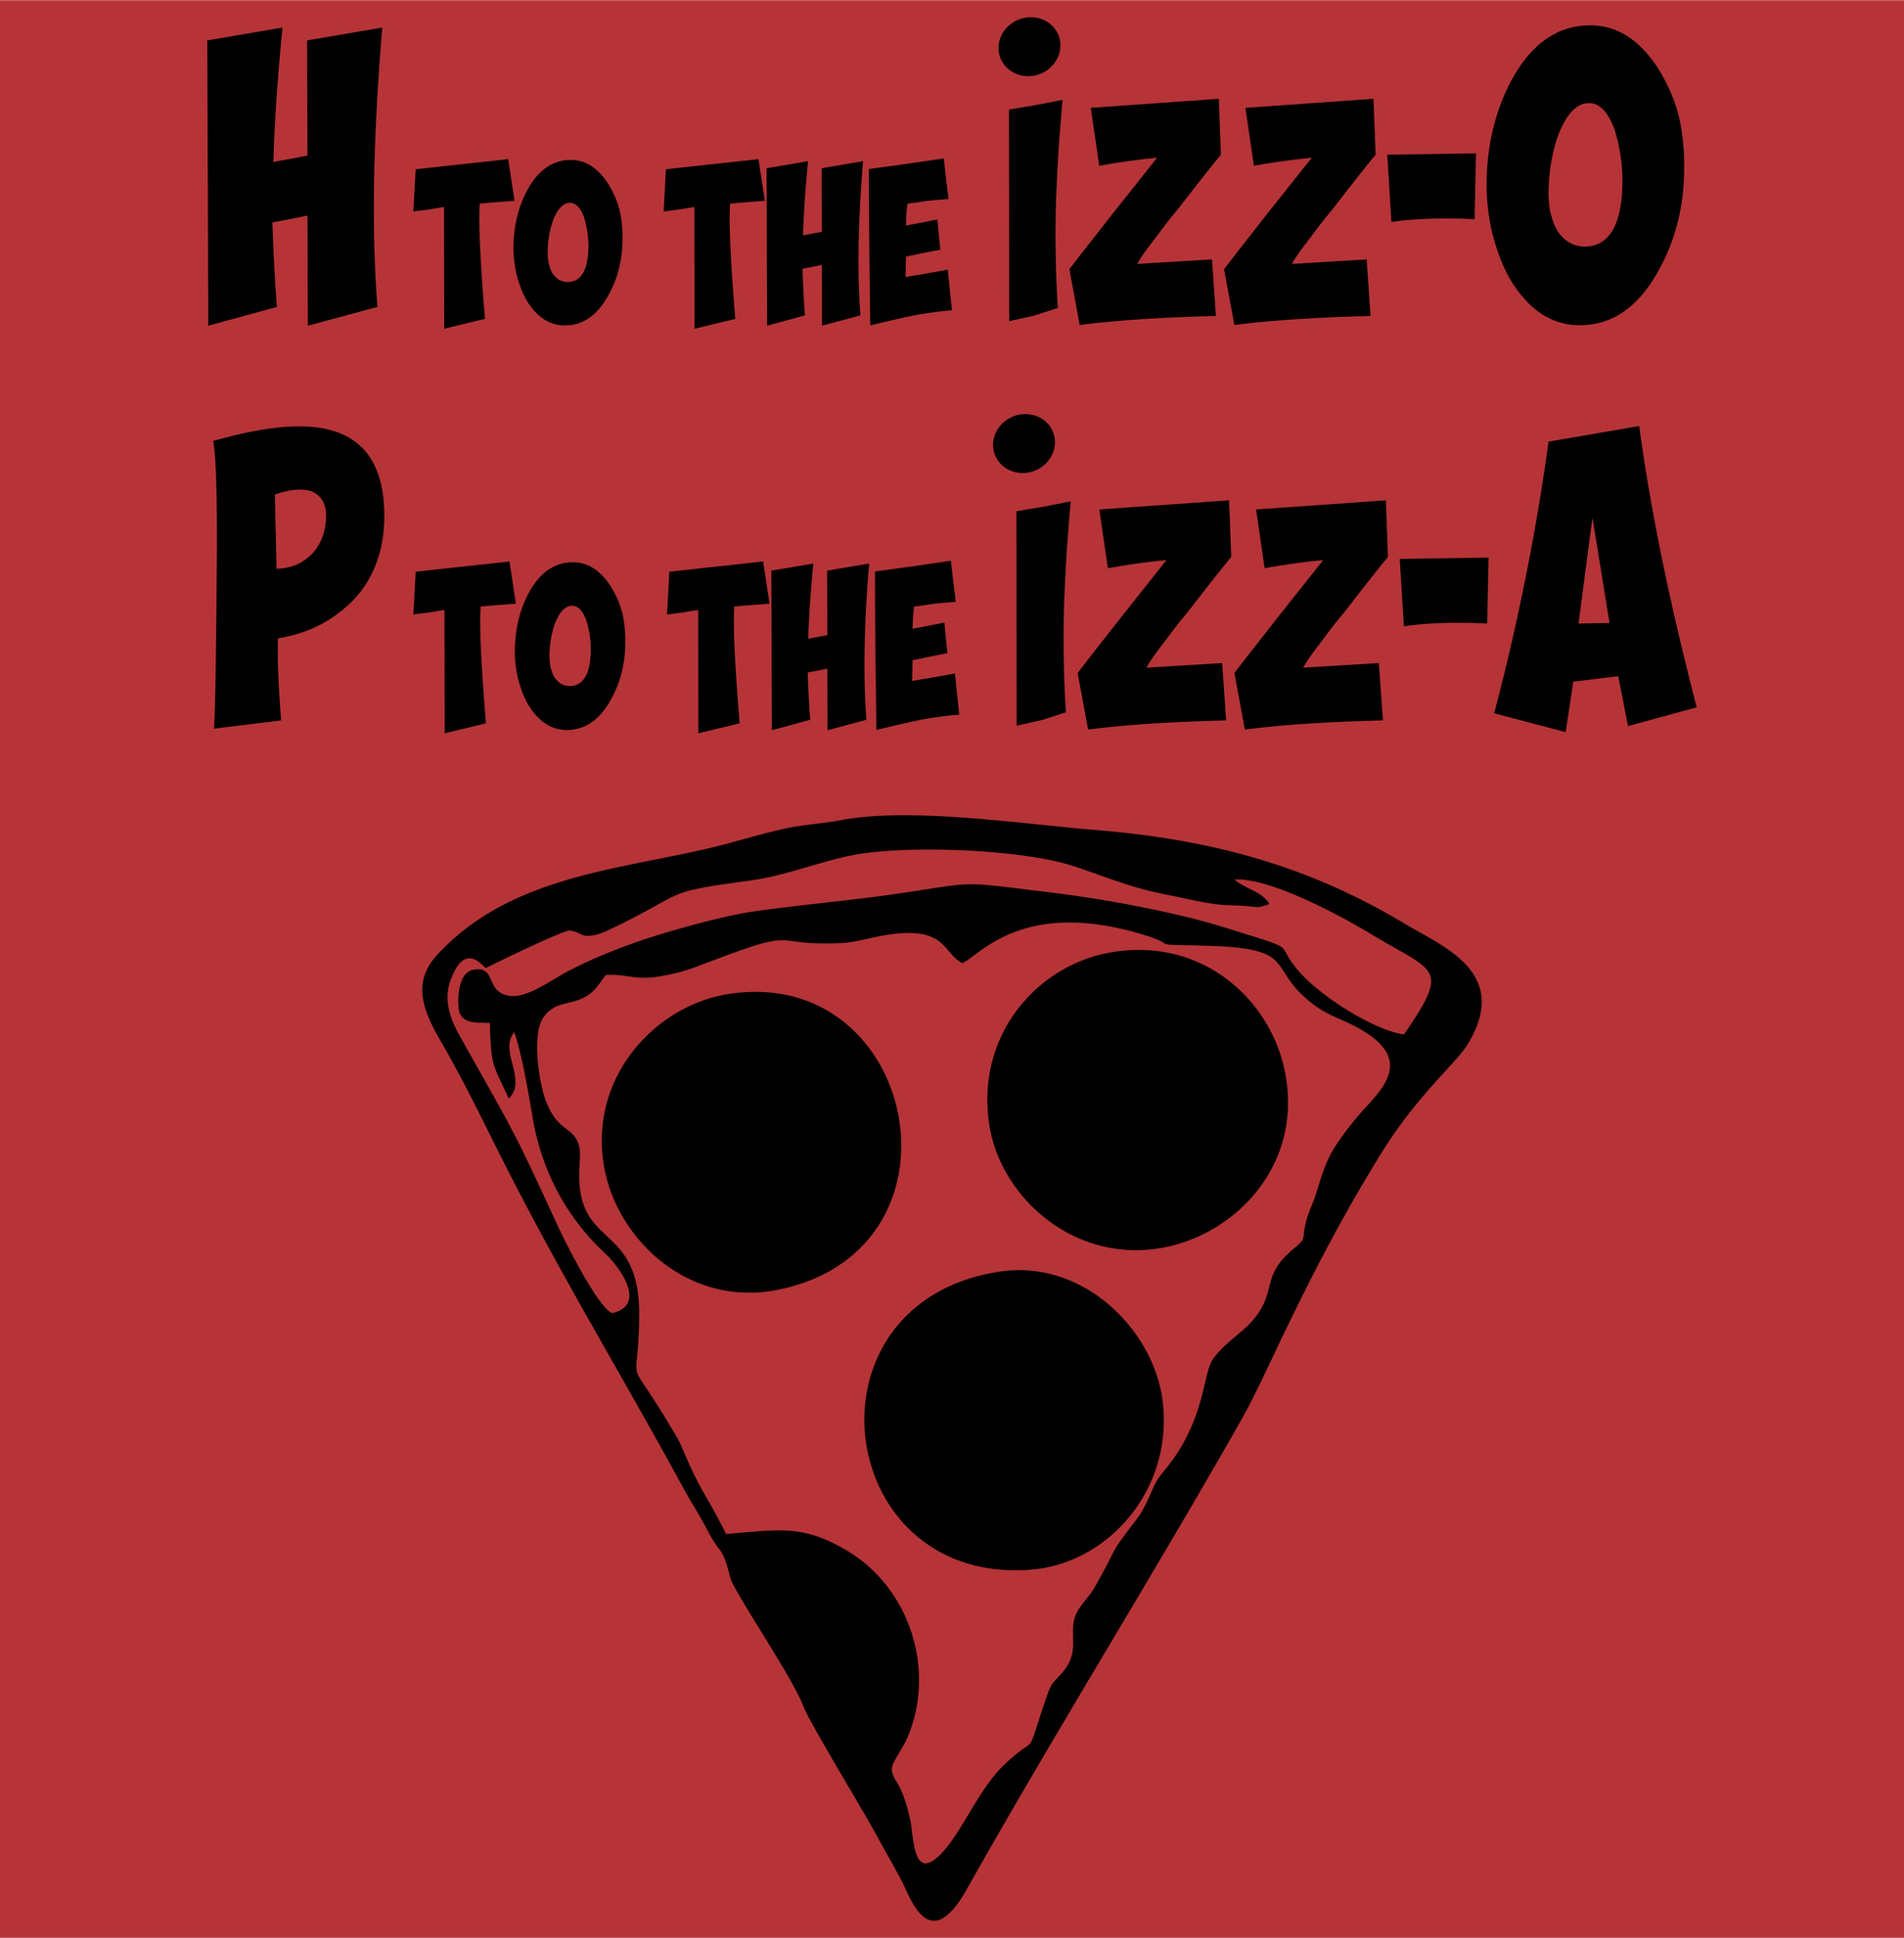 h to the izzo p to the izza pizza hova DTG design graphic